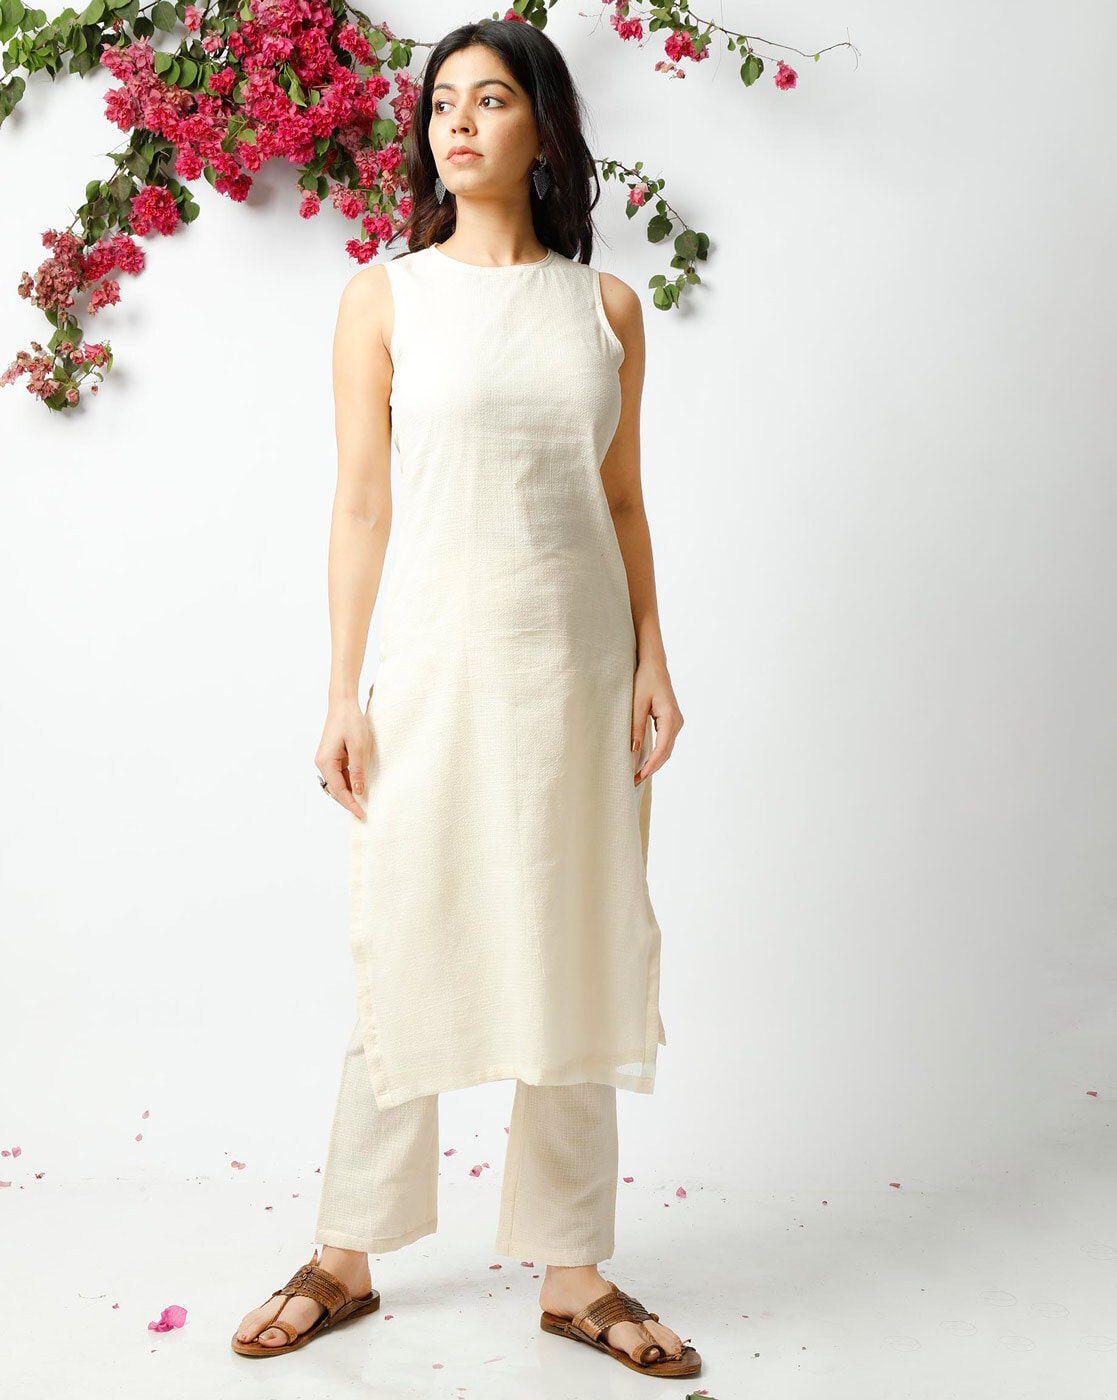 Pure Cotton White Sleeveless Blouse / Short Top Kurti, Lucknow  Chikankari/free Shipping in US - Etsy | White sleeveless blouse, Short  tops, White sleeveless